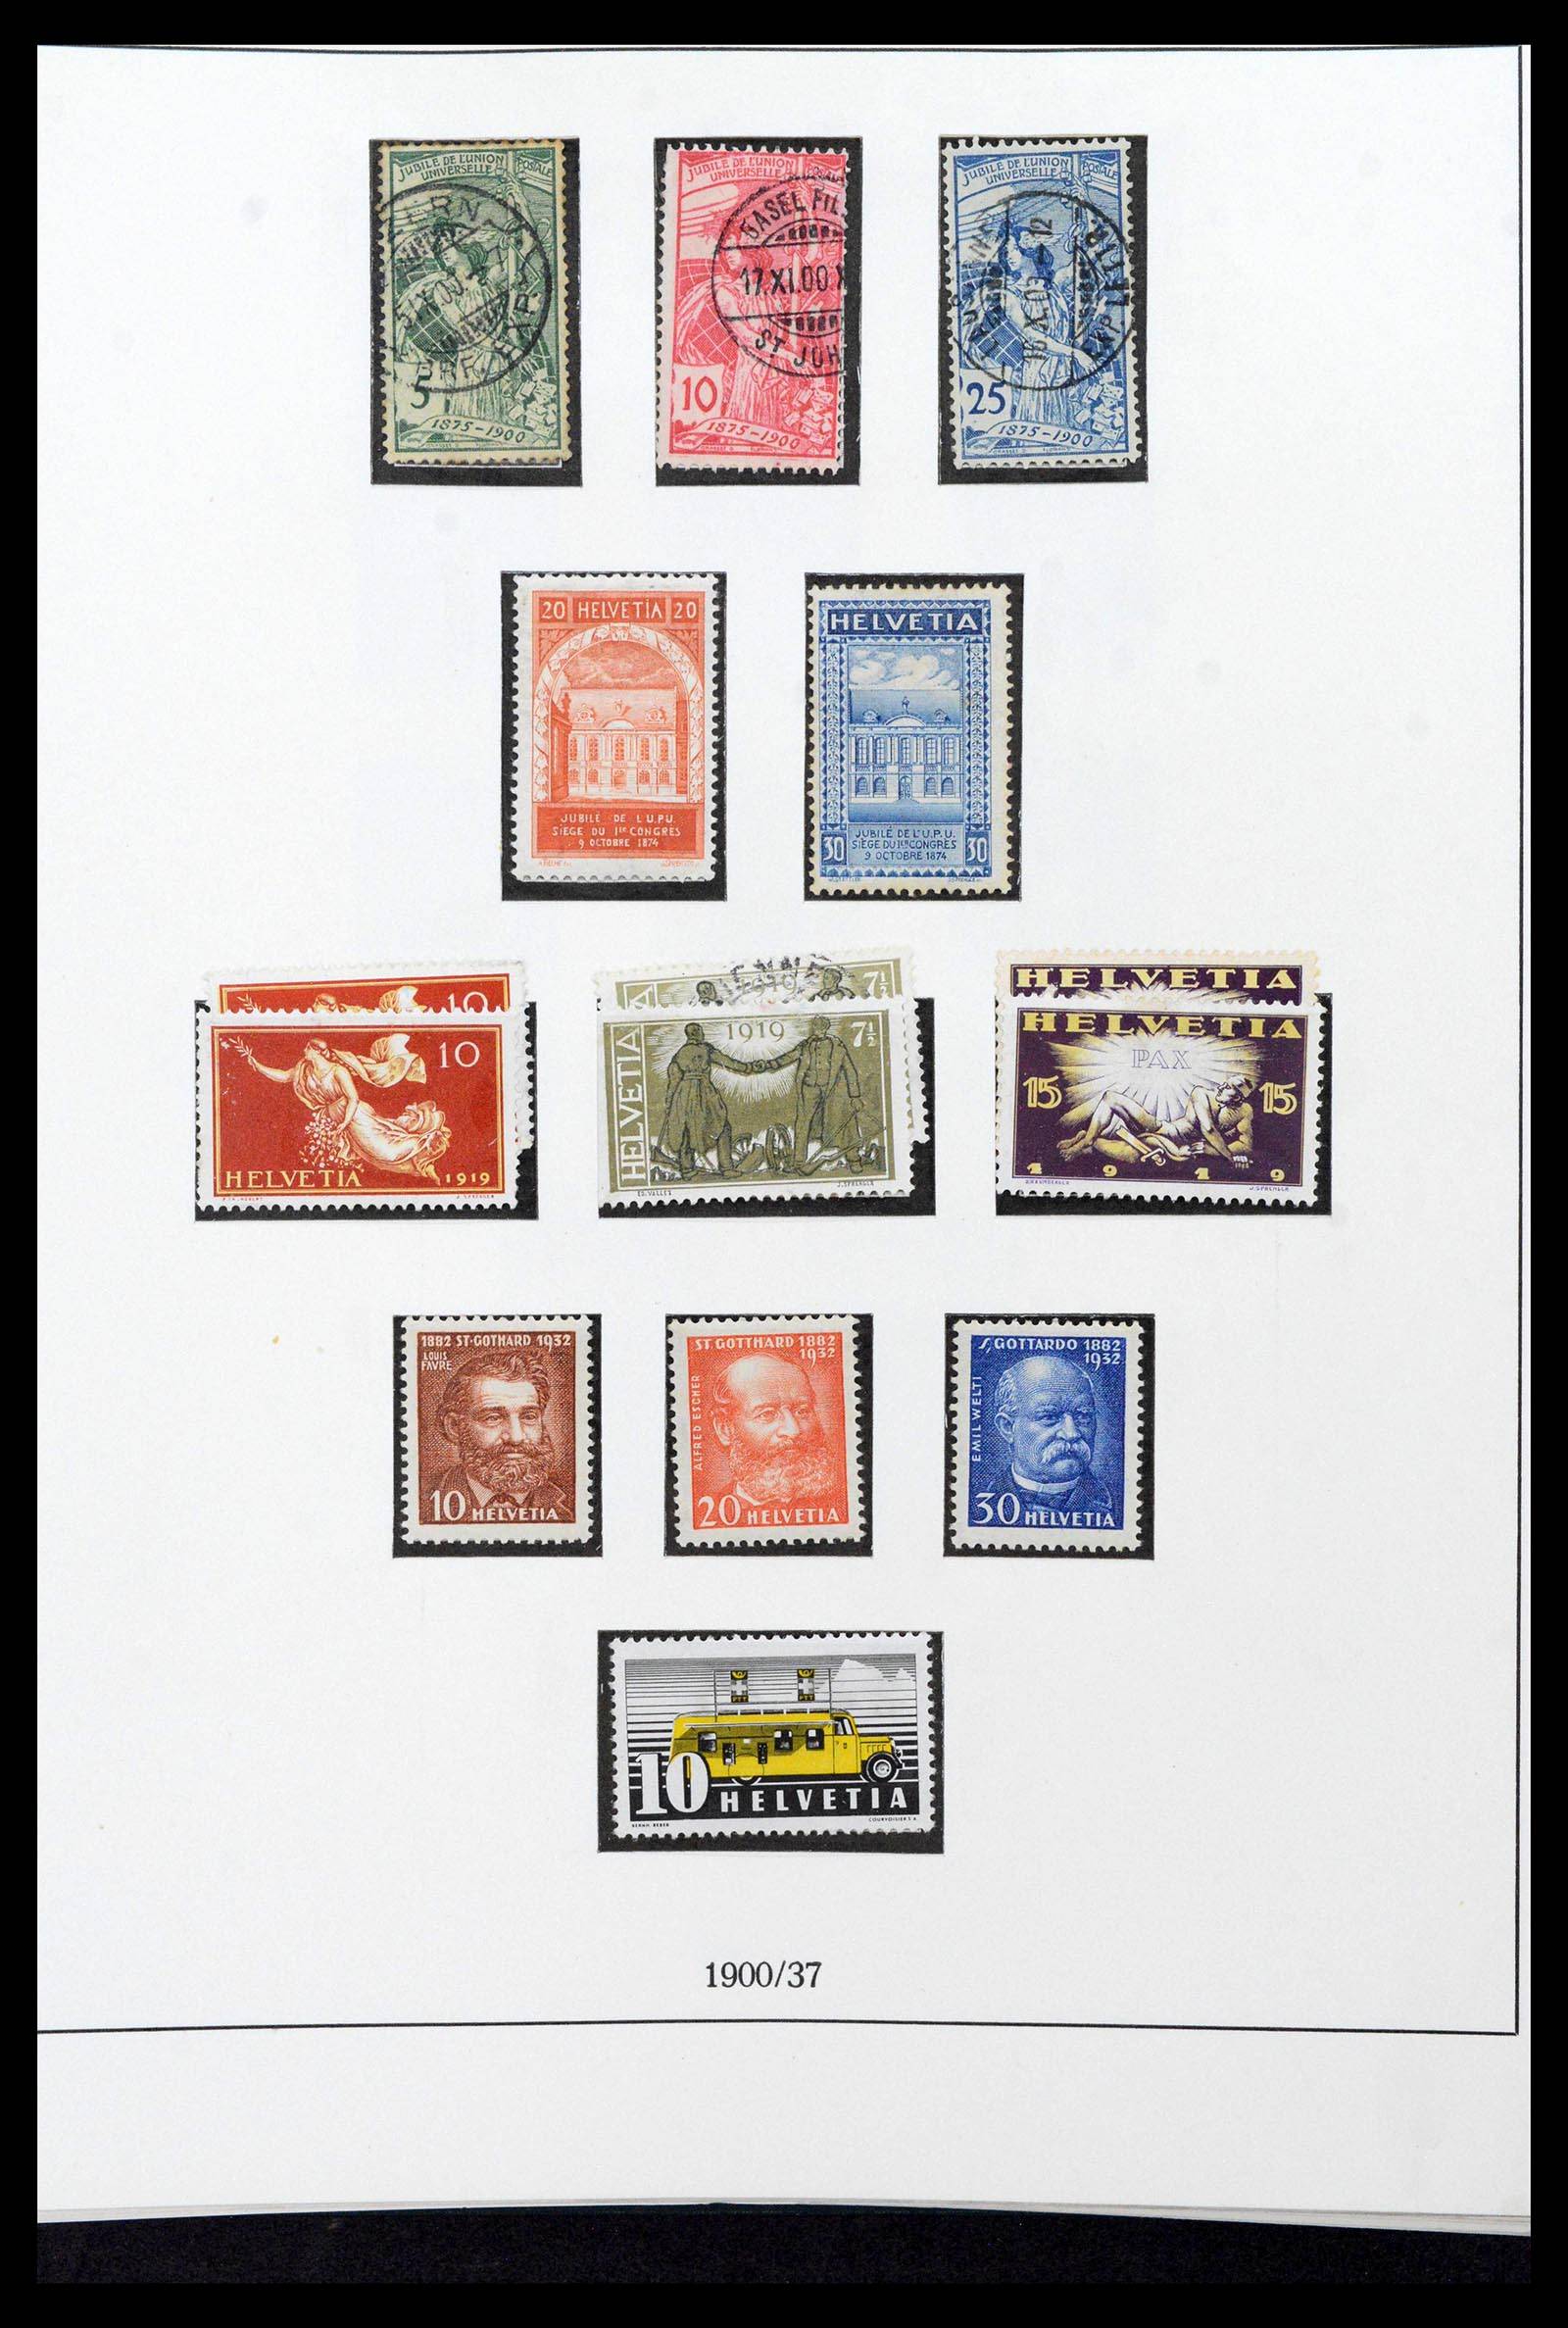 39235 0010 - Stamp collection 39235 Switzerland 1843-1960.